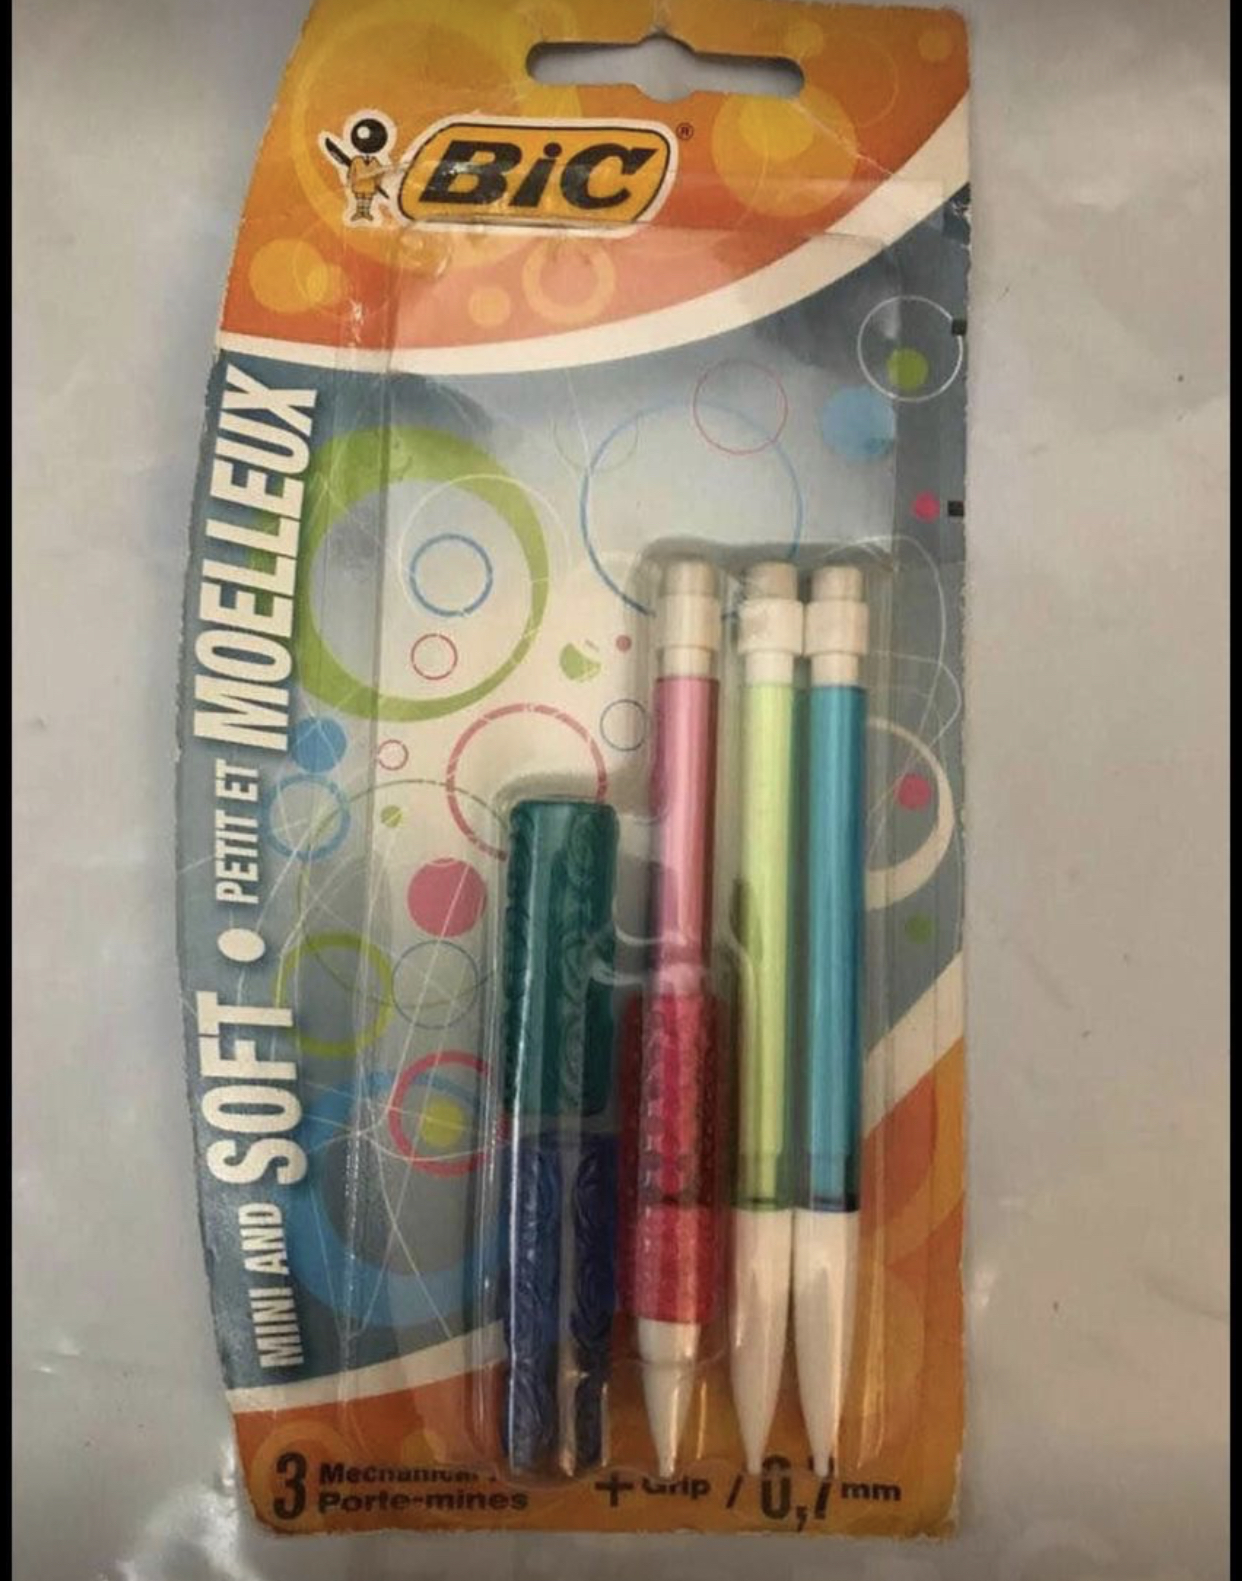 Mechanical pencils